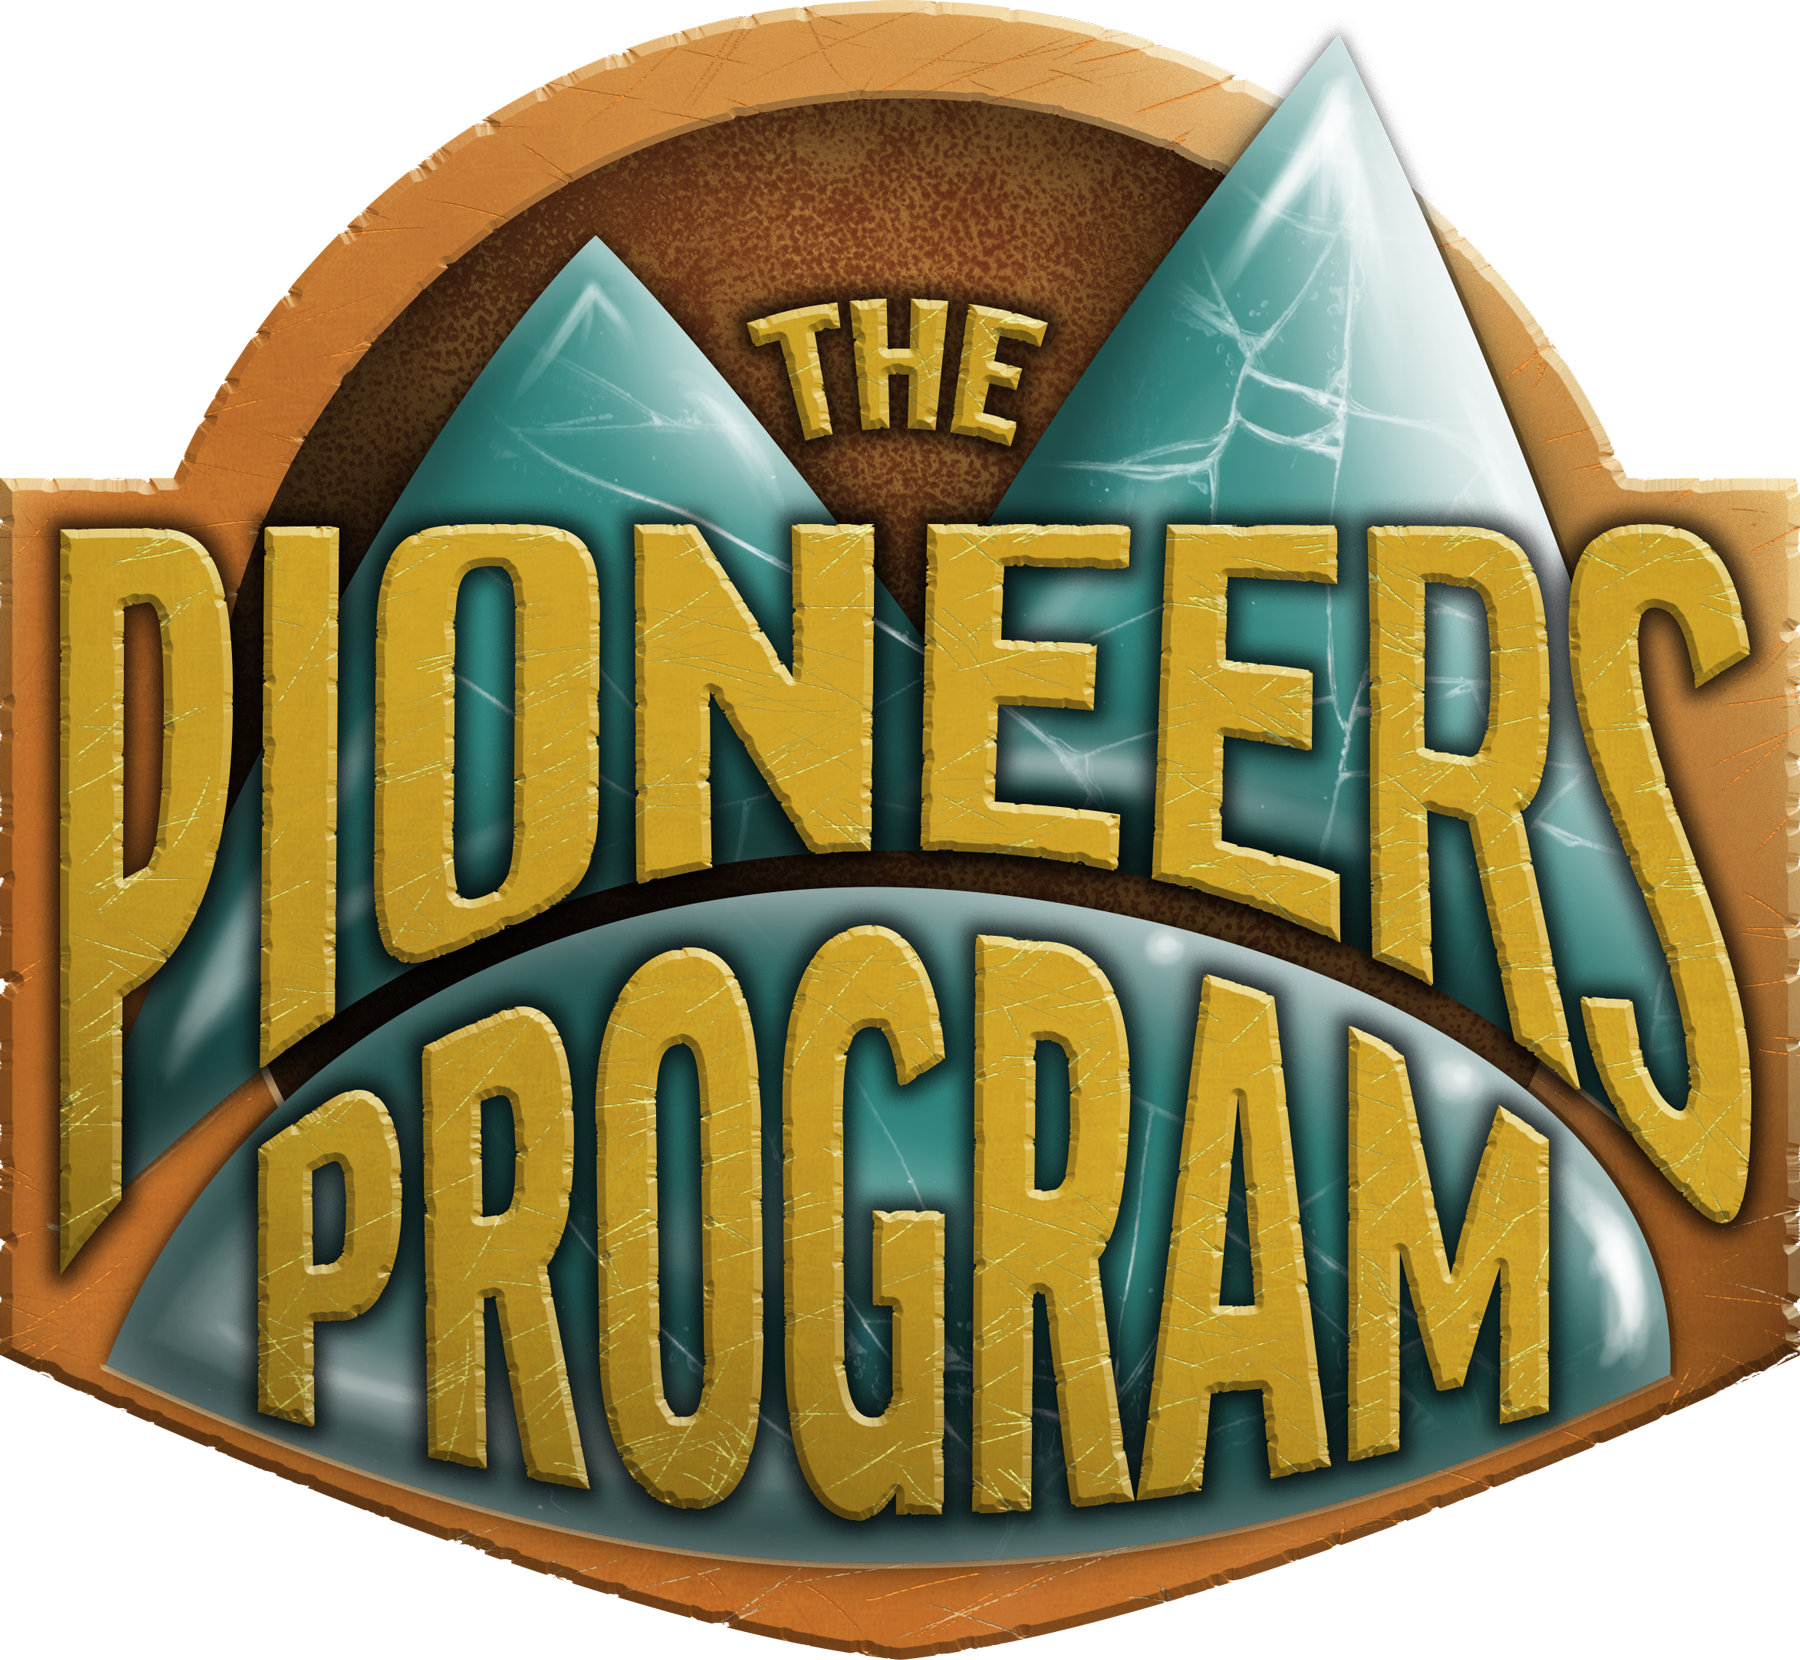 The Pioneers Program on Analog Games